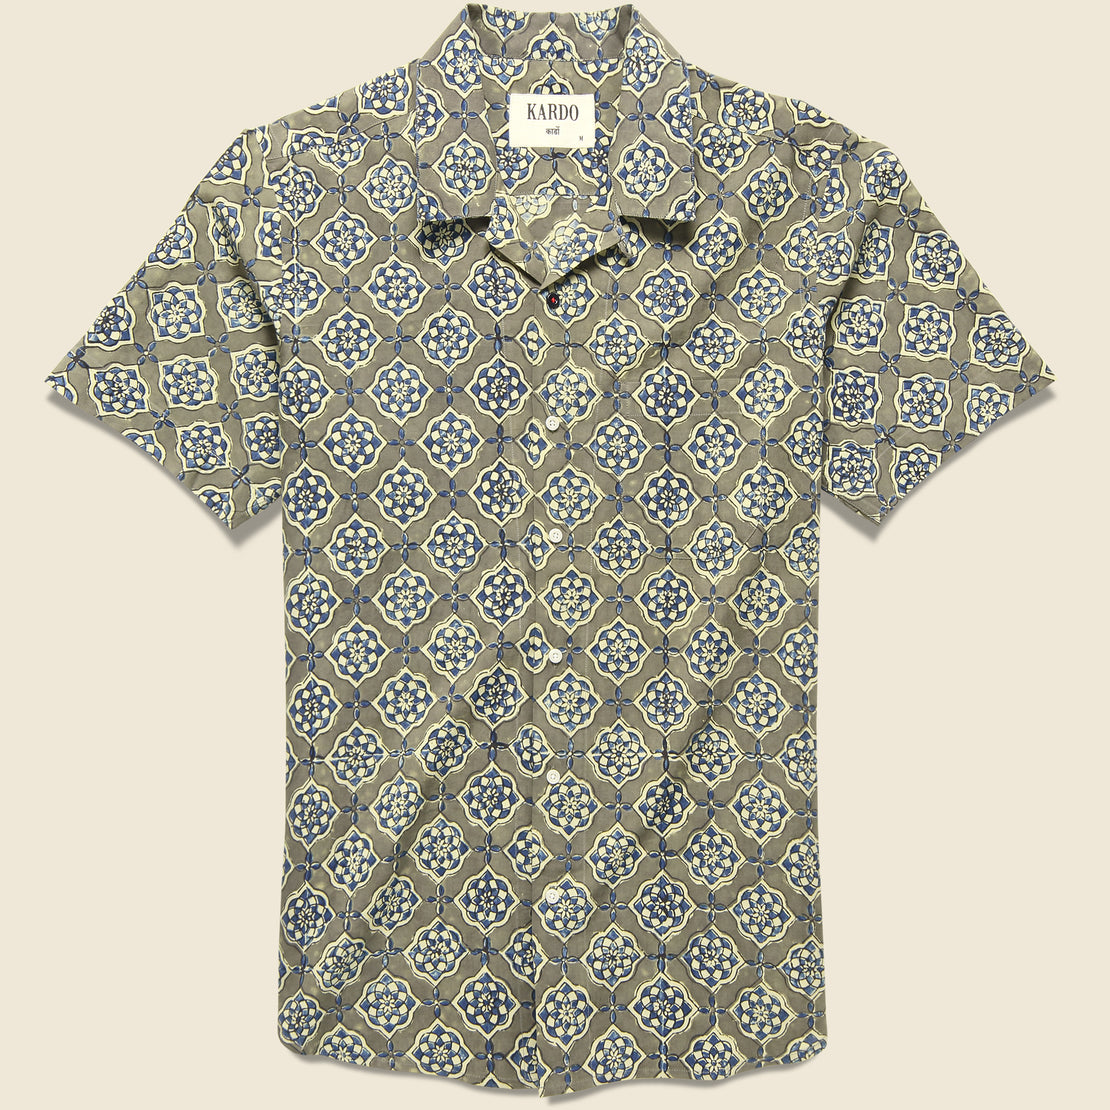 Kardo Lamar Block Print Tile Shirt - Grey/Blue